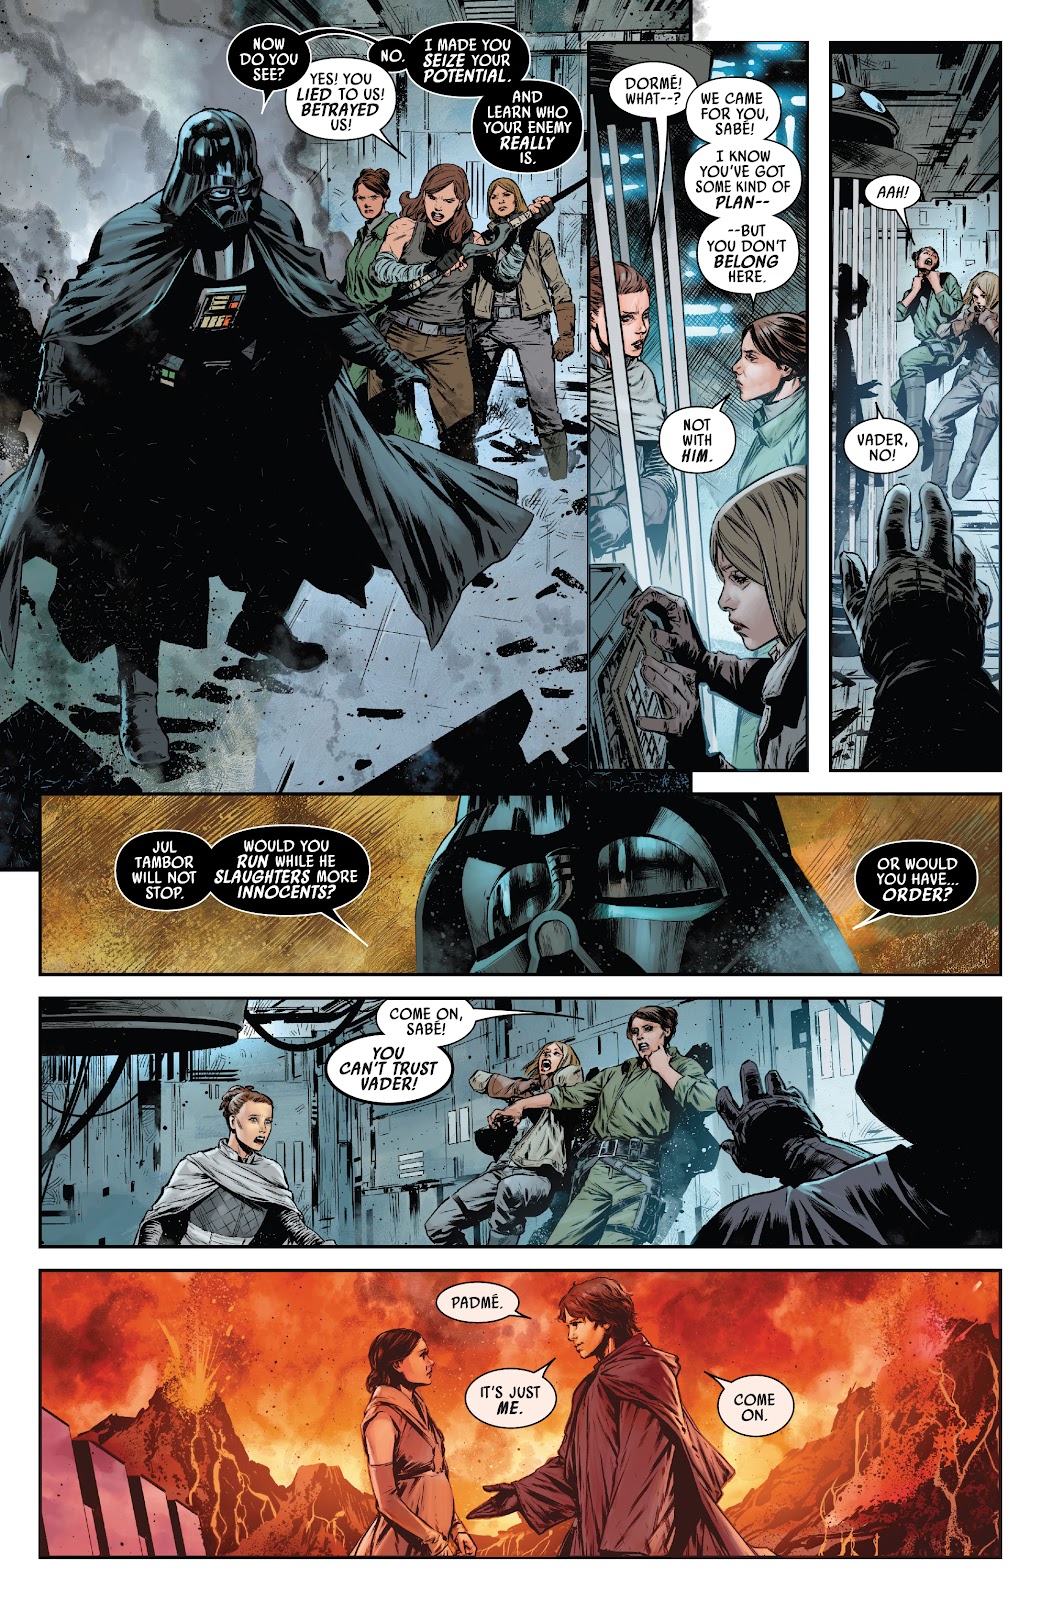 Darth Vader Rescues Sabe